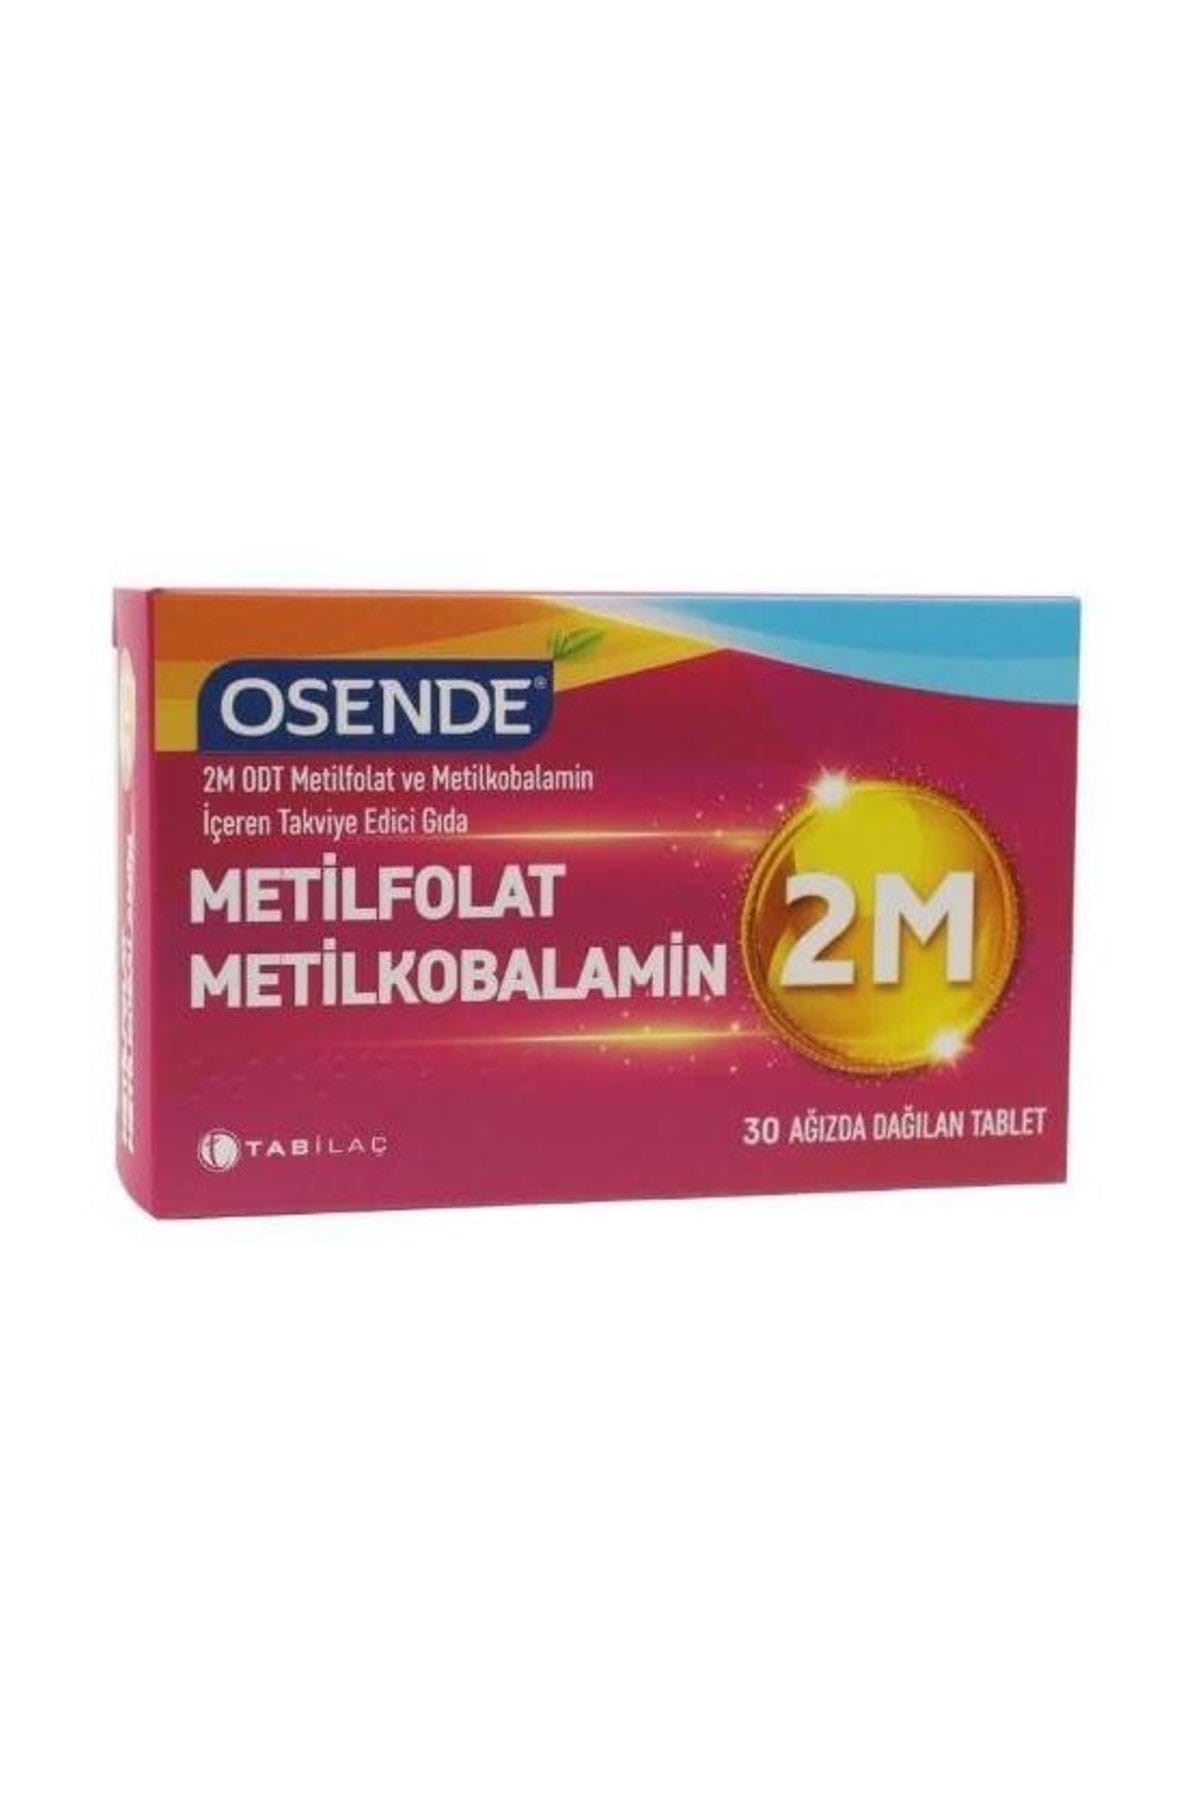 OSENDE 2M Metilkobalamin B12+Metilfolat Folik Asit 30 Tablet | Farma Ucuz